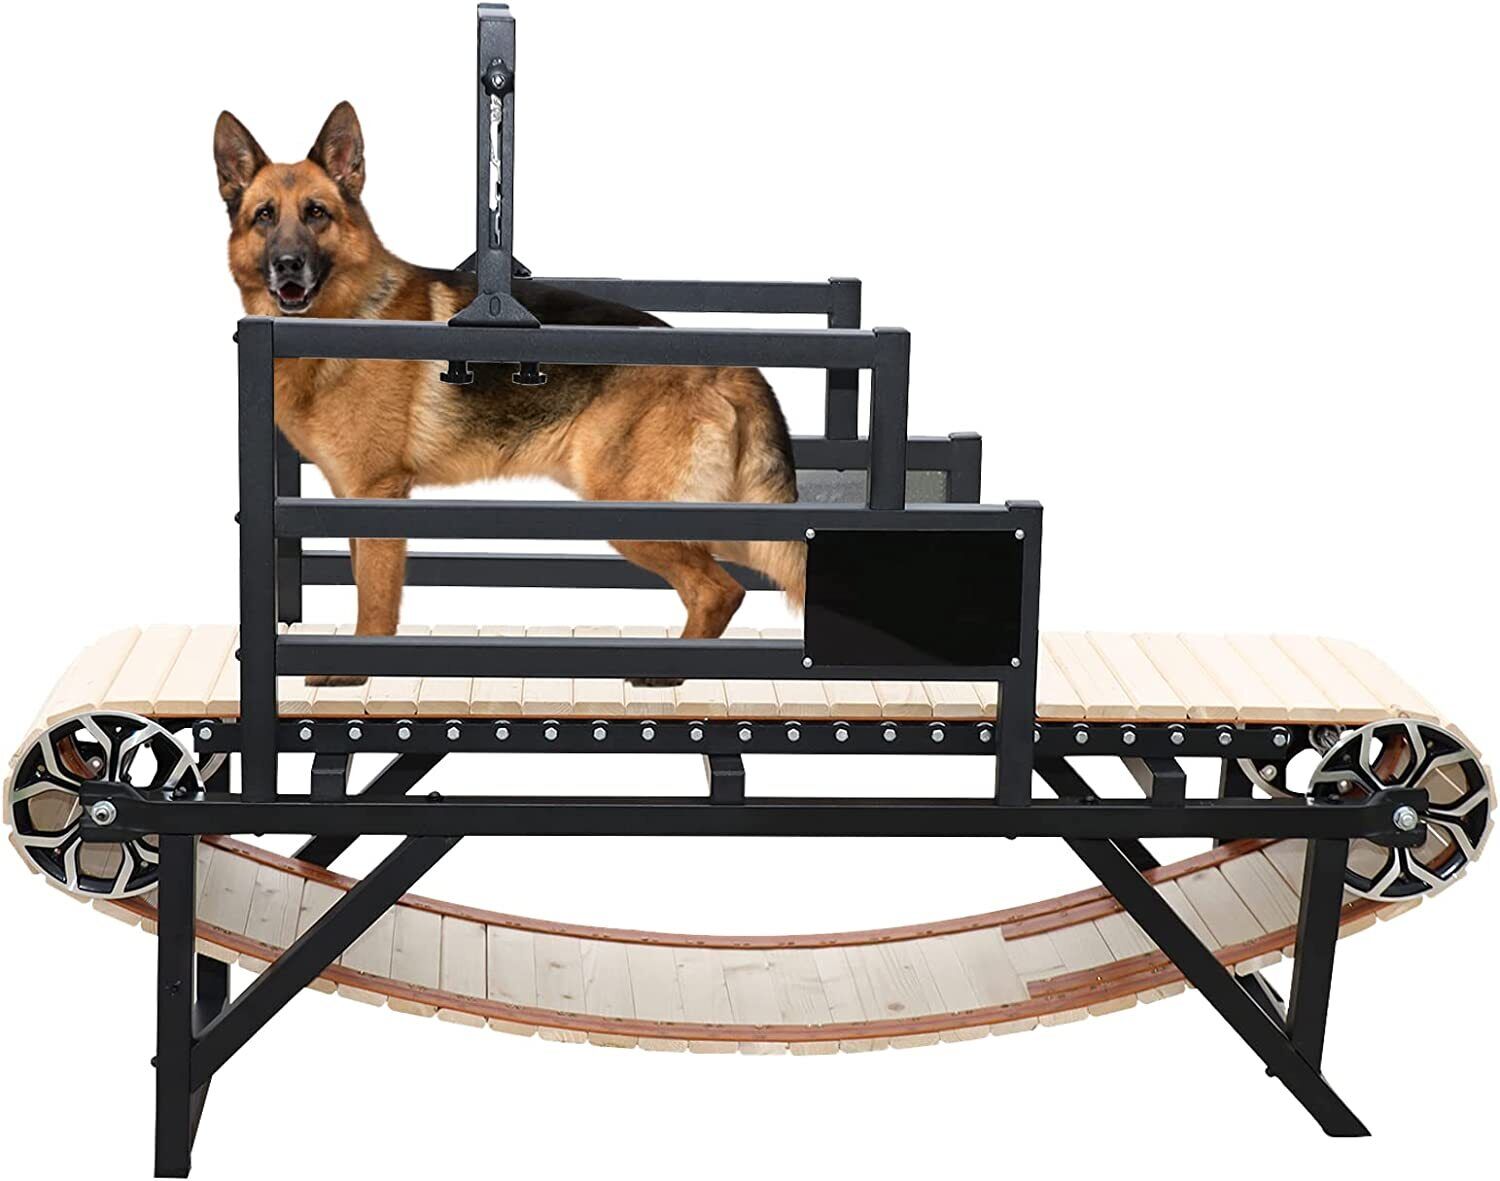 Treadmill for Medium Dogs Dog Treadmill for Large Dog Tread Health Training Tool